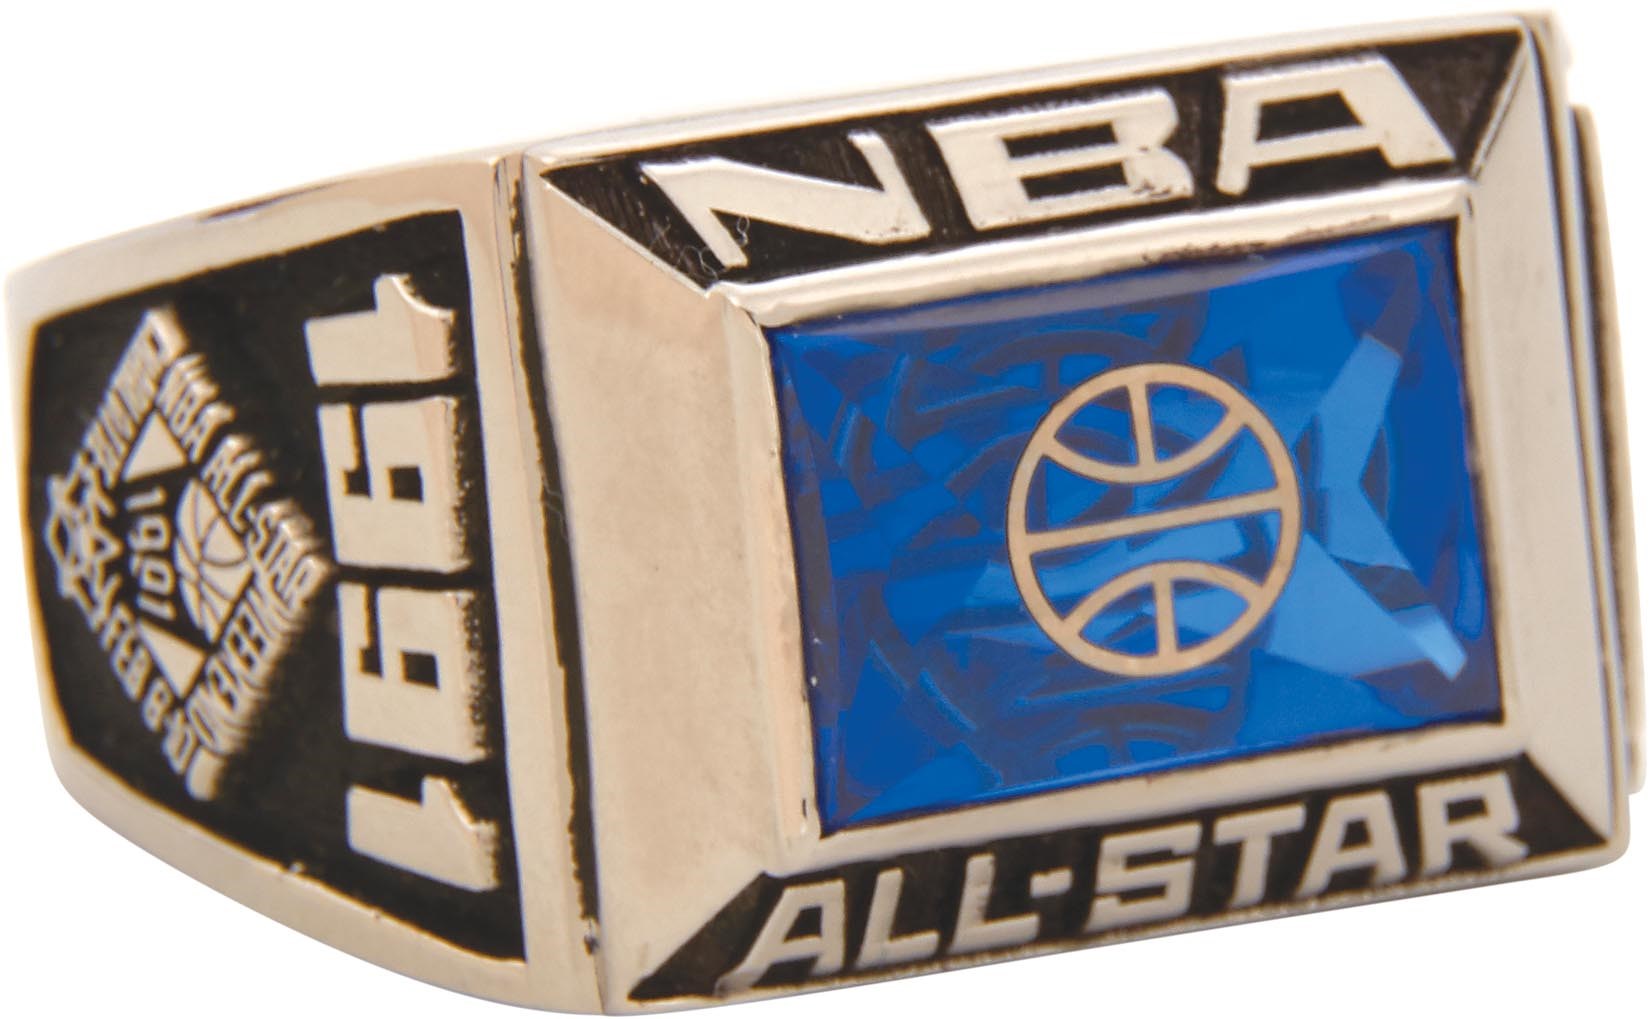 - 1991 Oscar Robertson NBA All-Star Game Ring